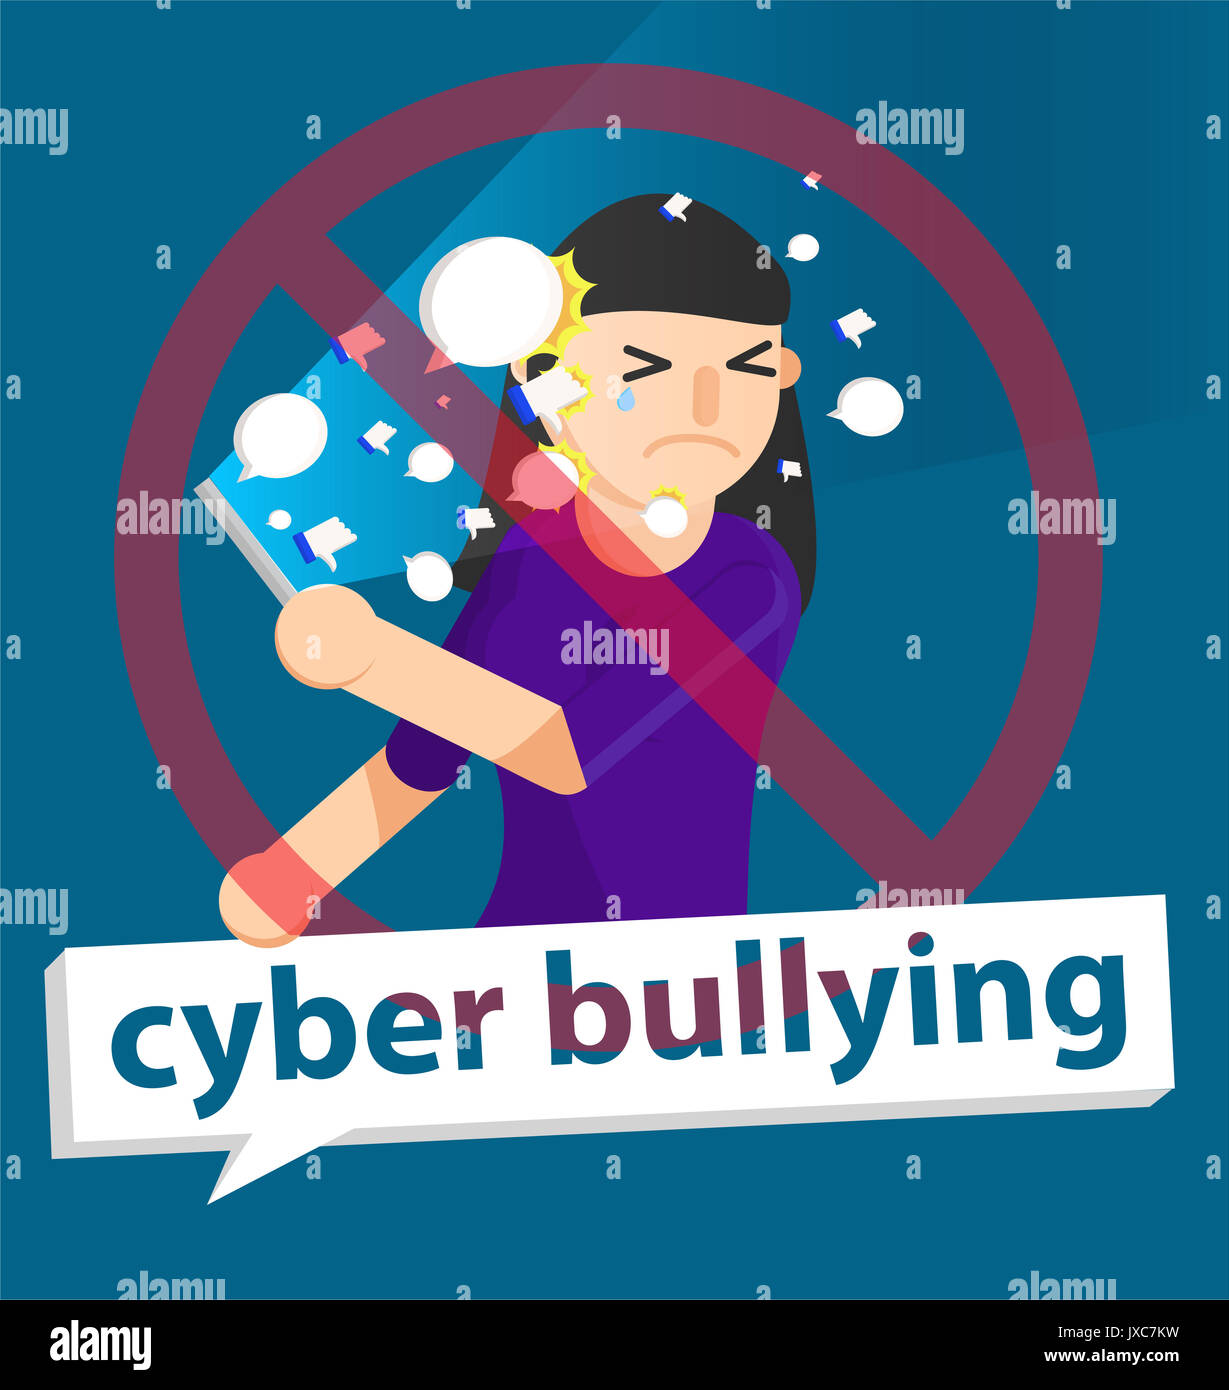 cyber bullying cartoon characters